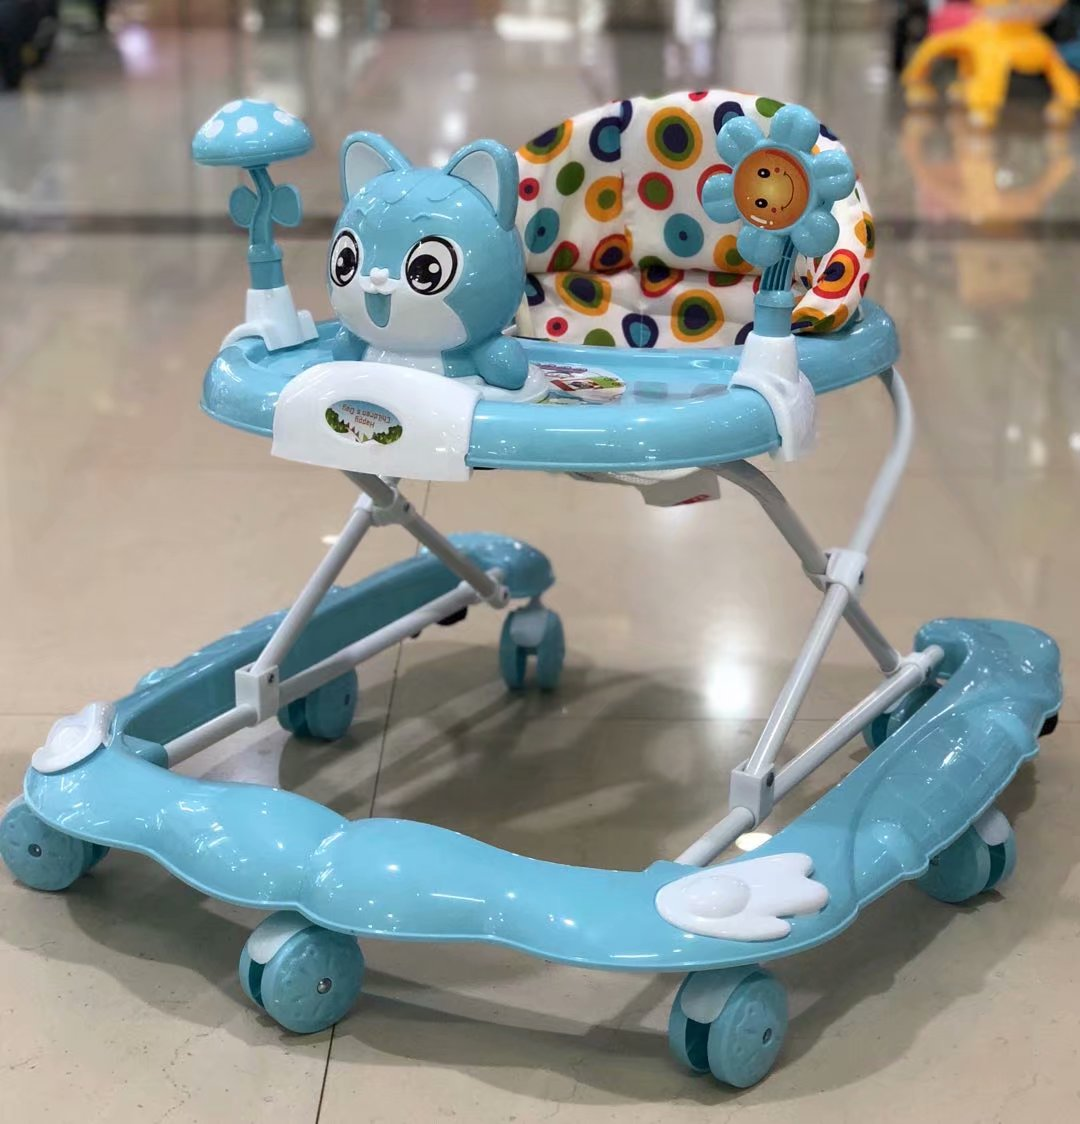 2019 new model cheap price baby walker buy online Best foldable kids walking chair toys educational interactive baby walker